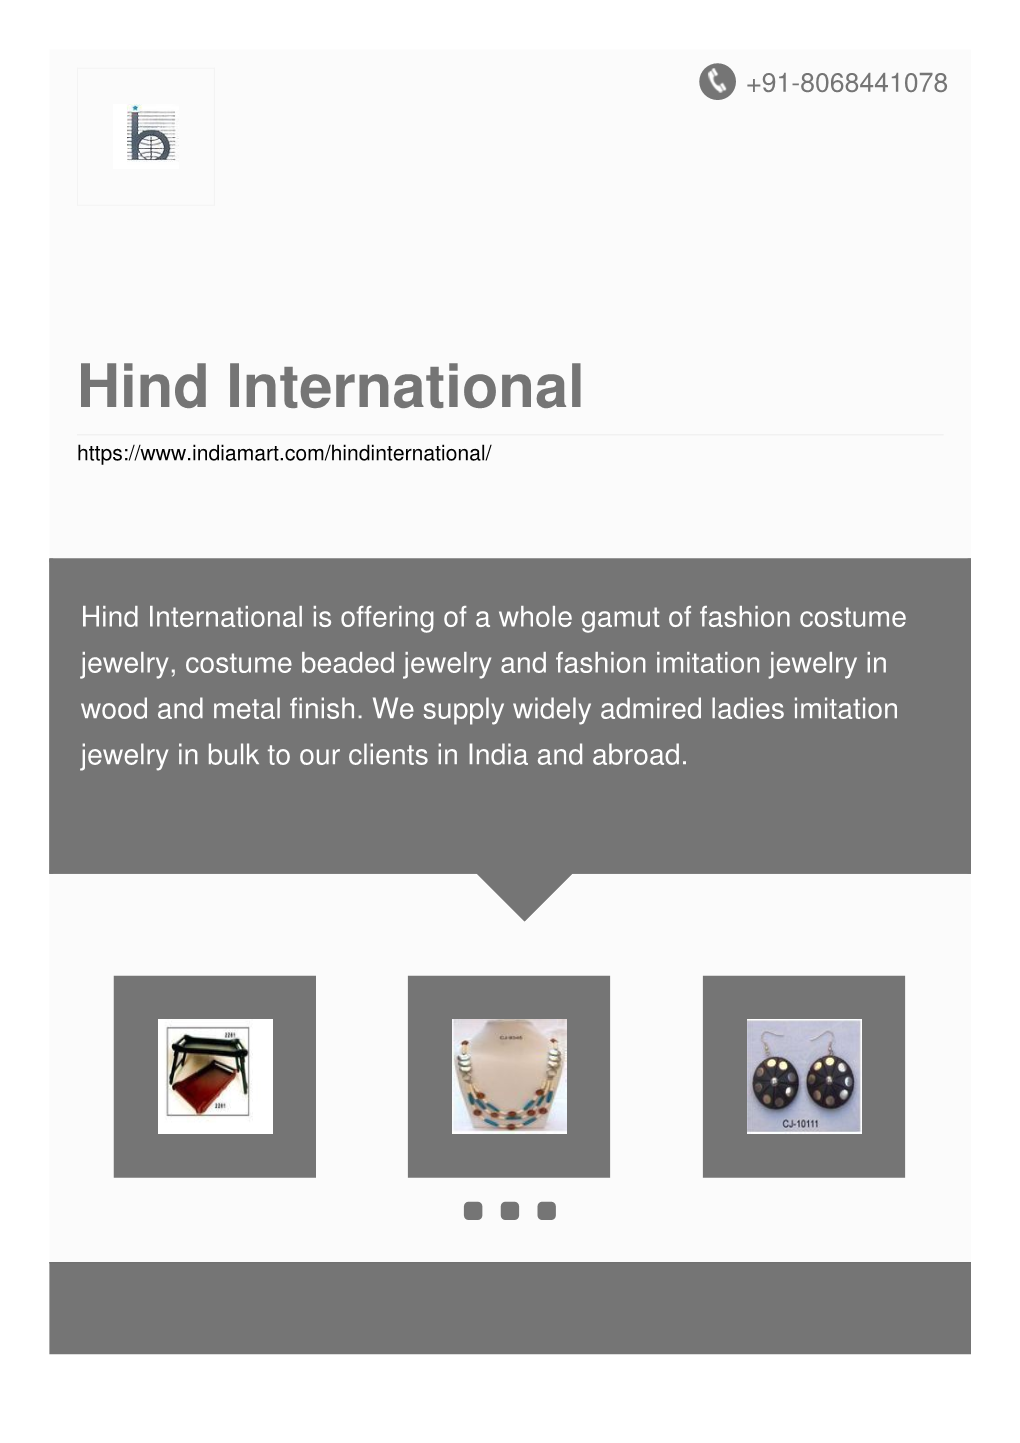 Hind International